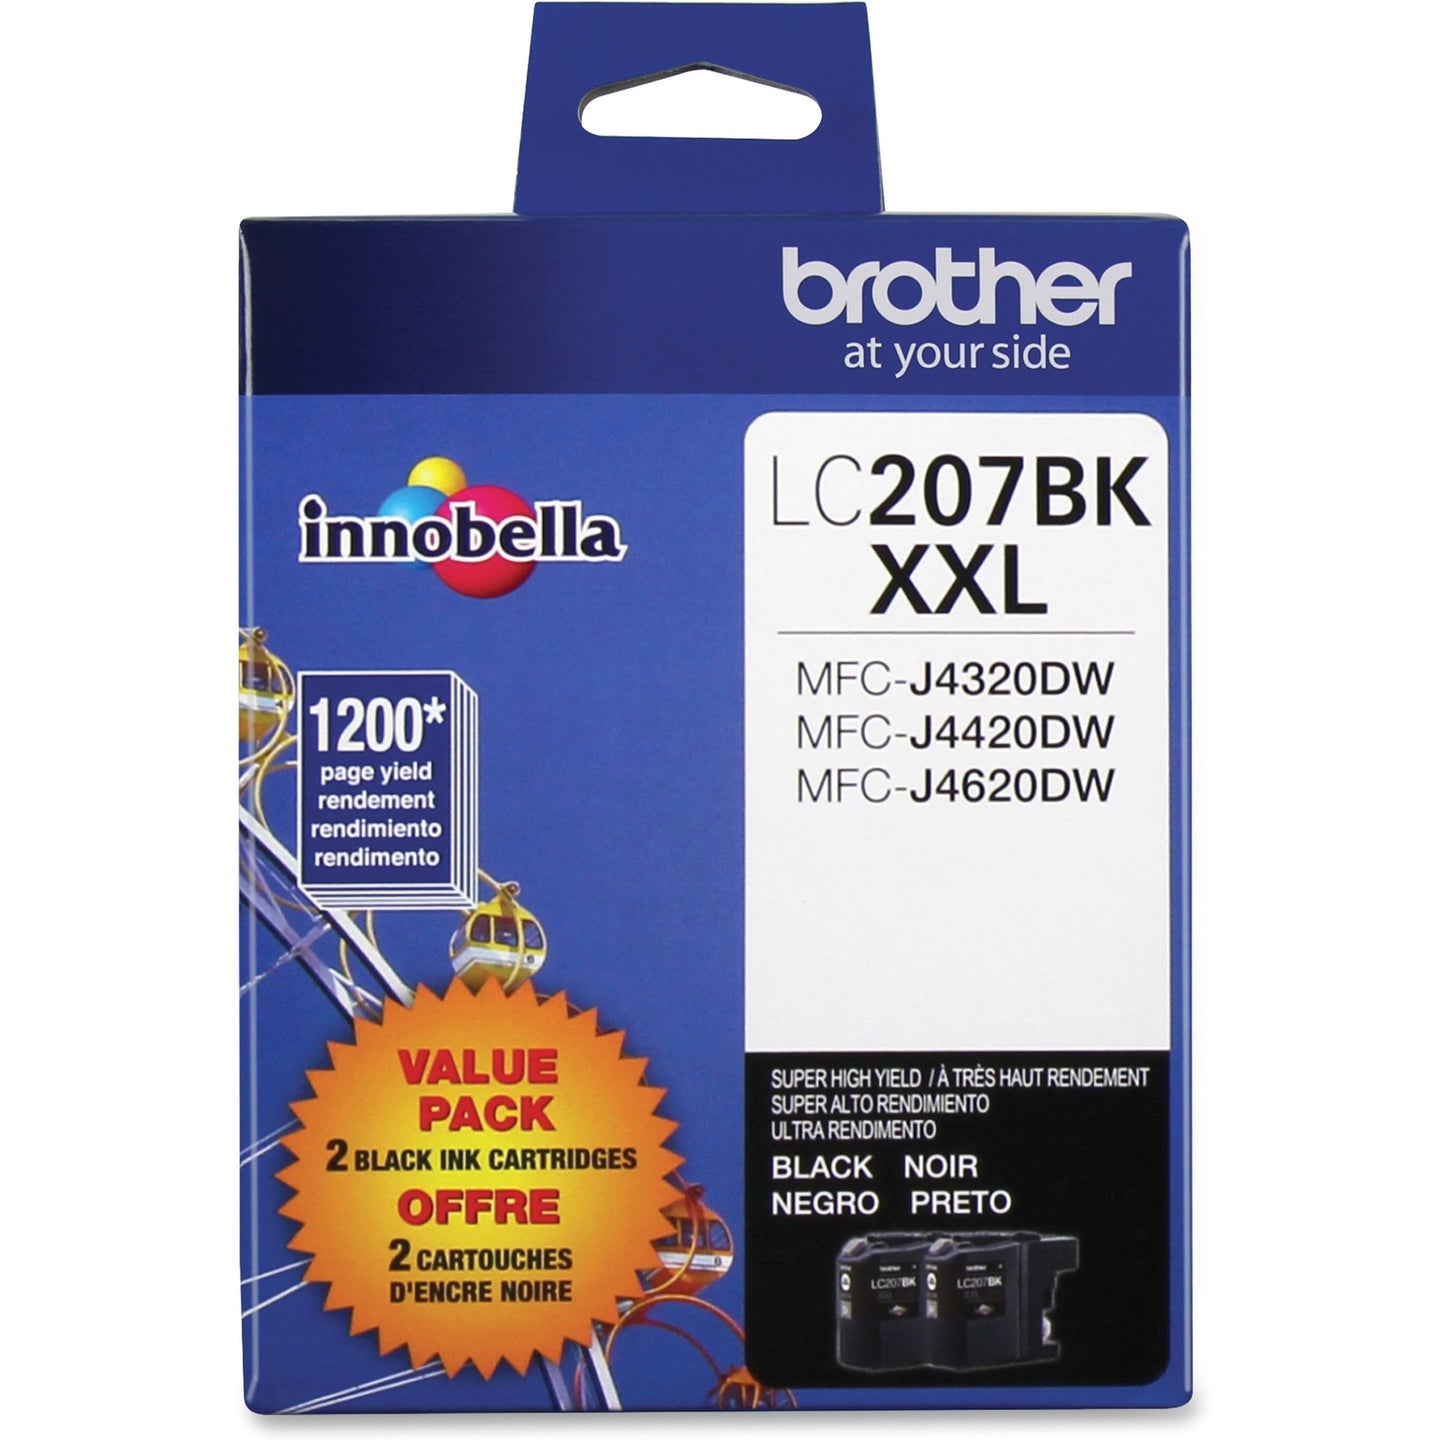 Brother Innobella LC2072PKS Ink Cartridge